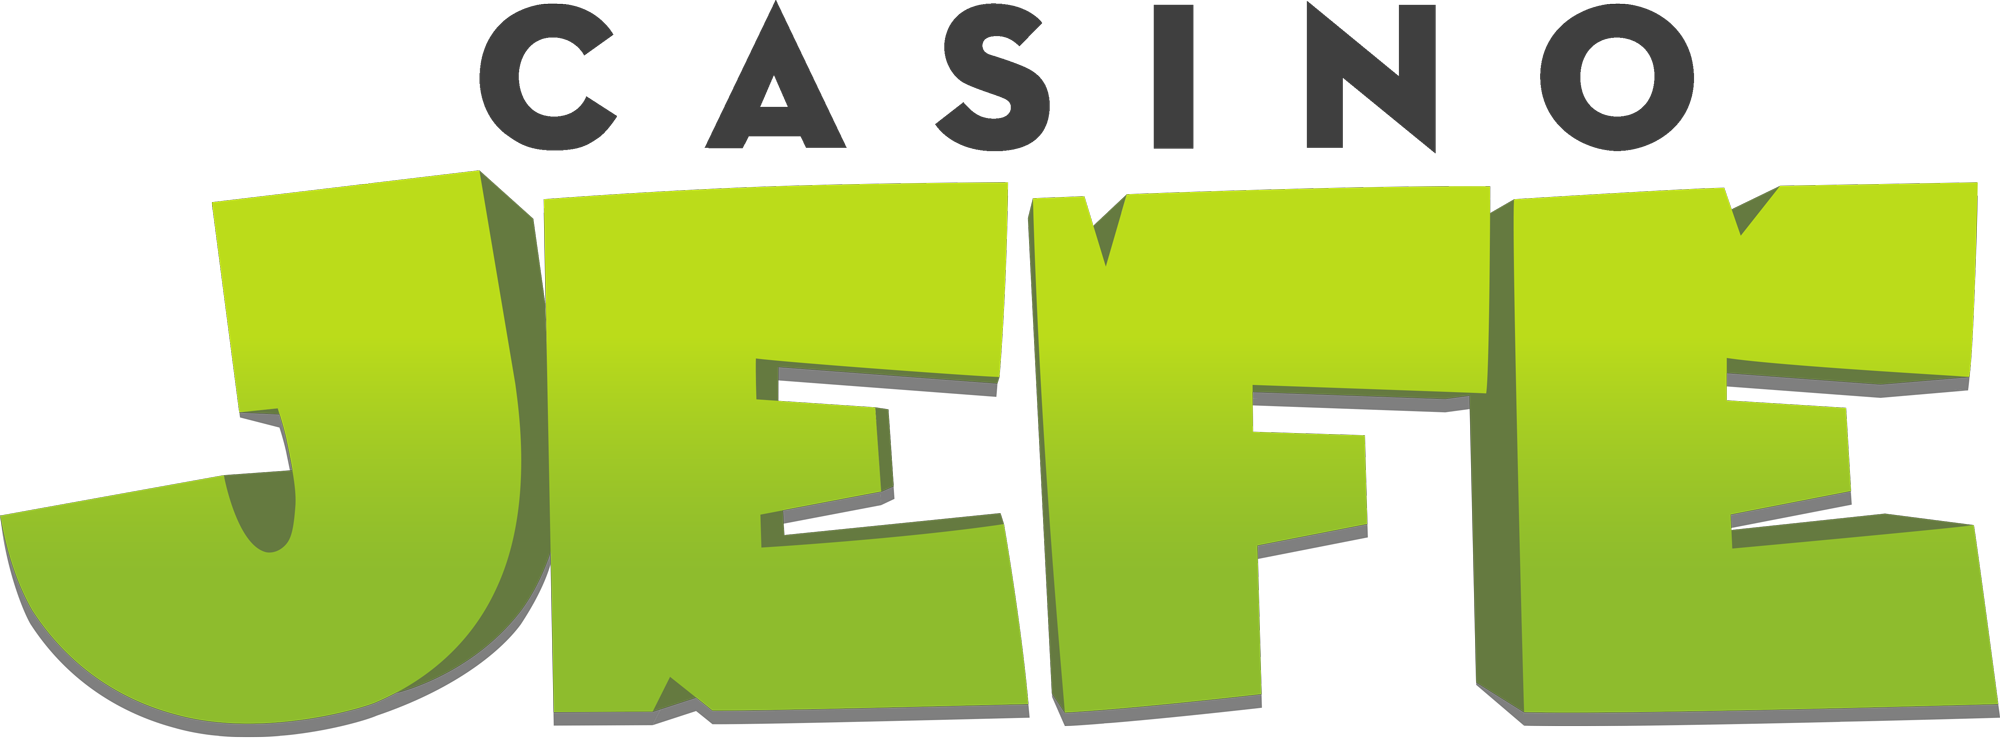 casinojefe_logo